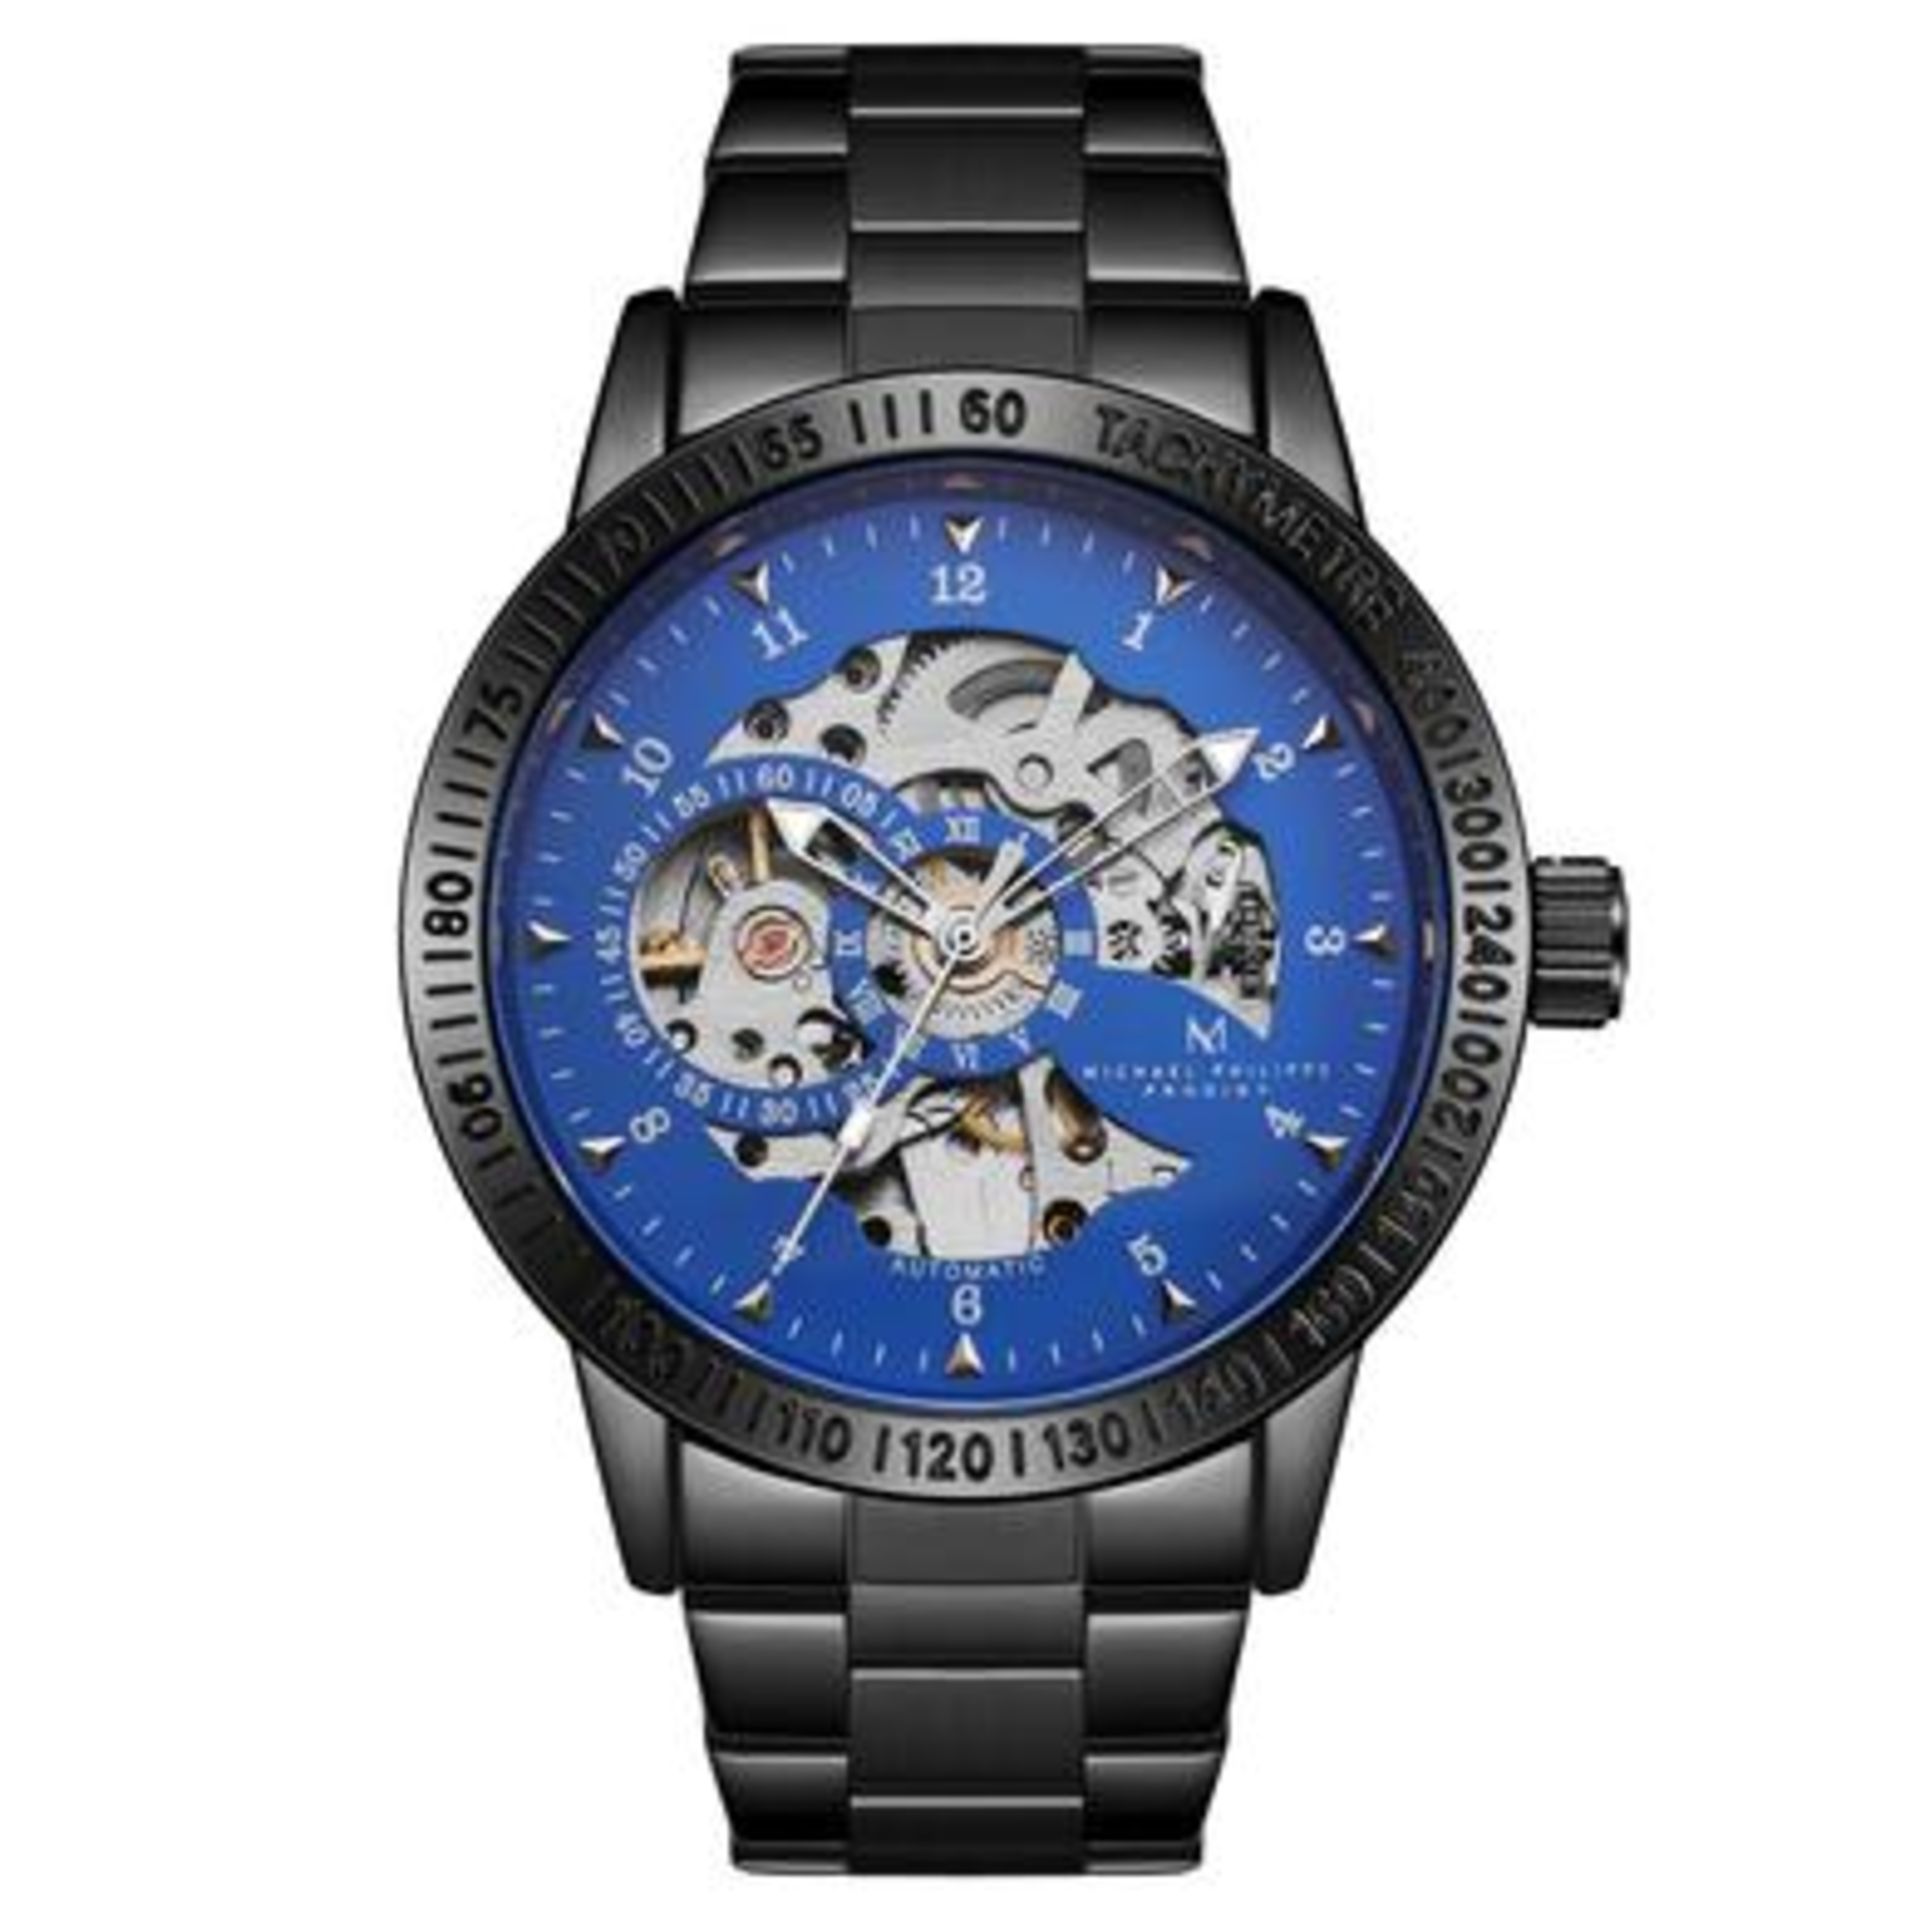 V Brand New Michael Philippe Prodigy Blue Face Automatic Skeleton Style Gents Bracelet Watch £209.99